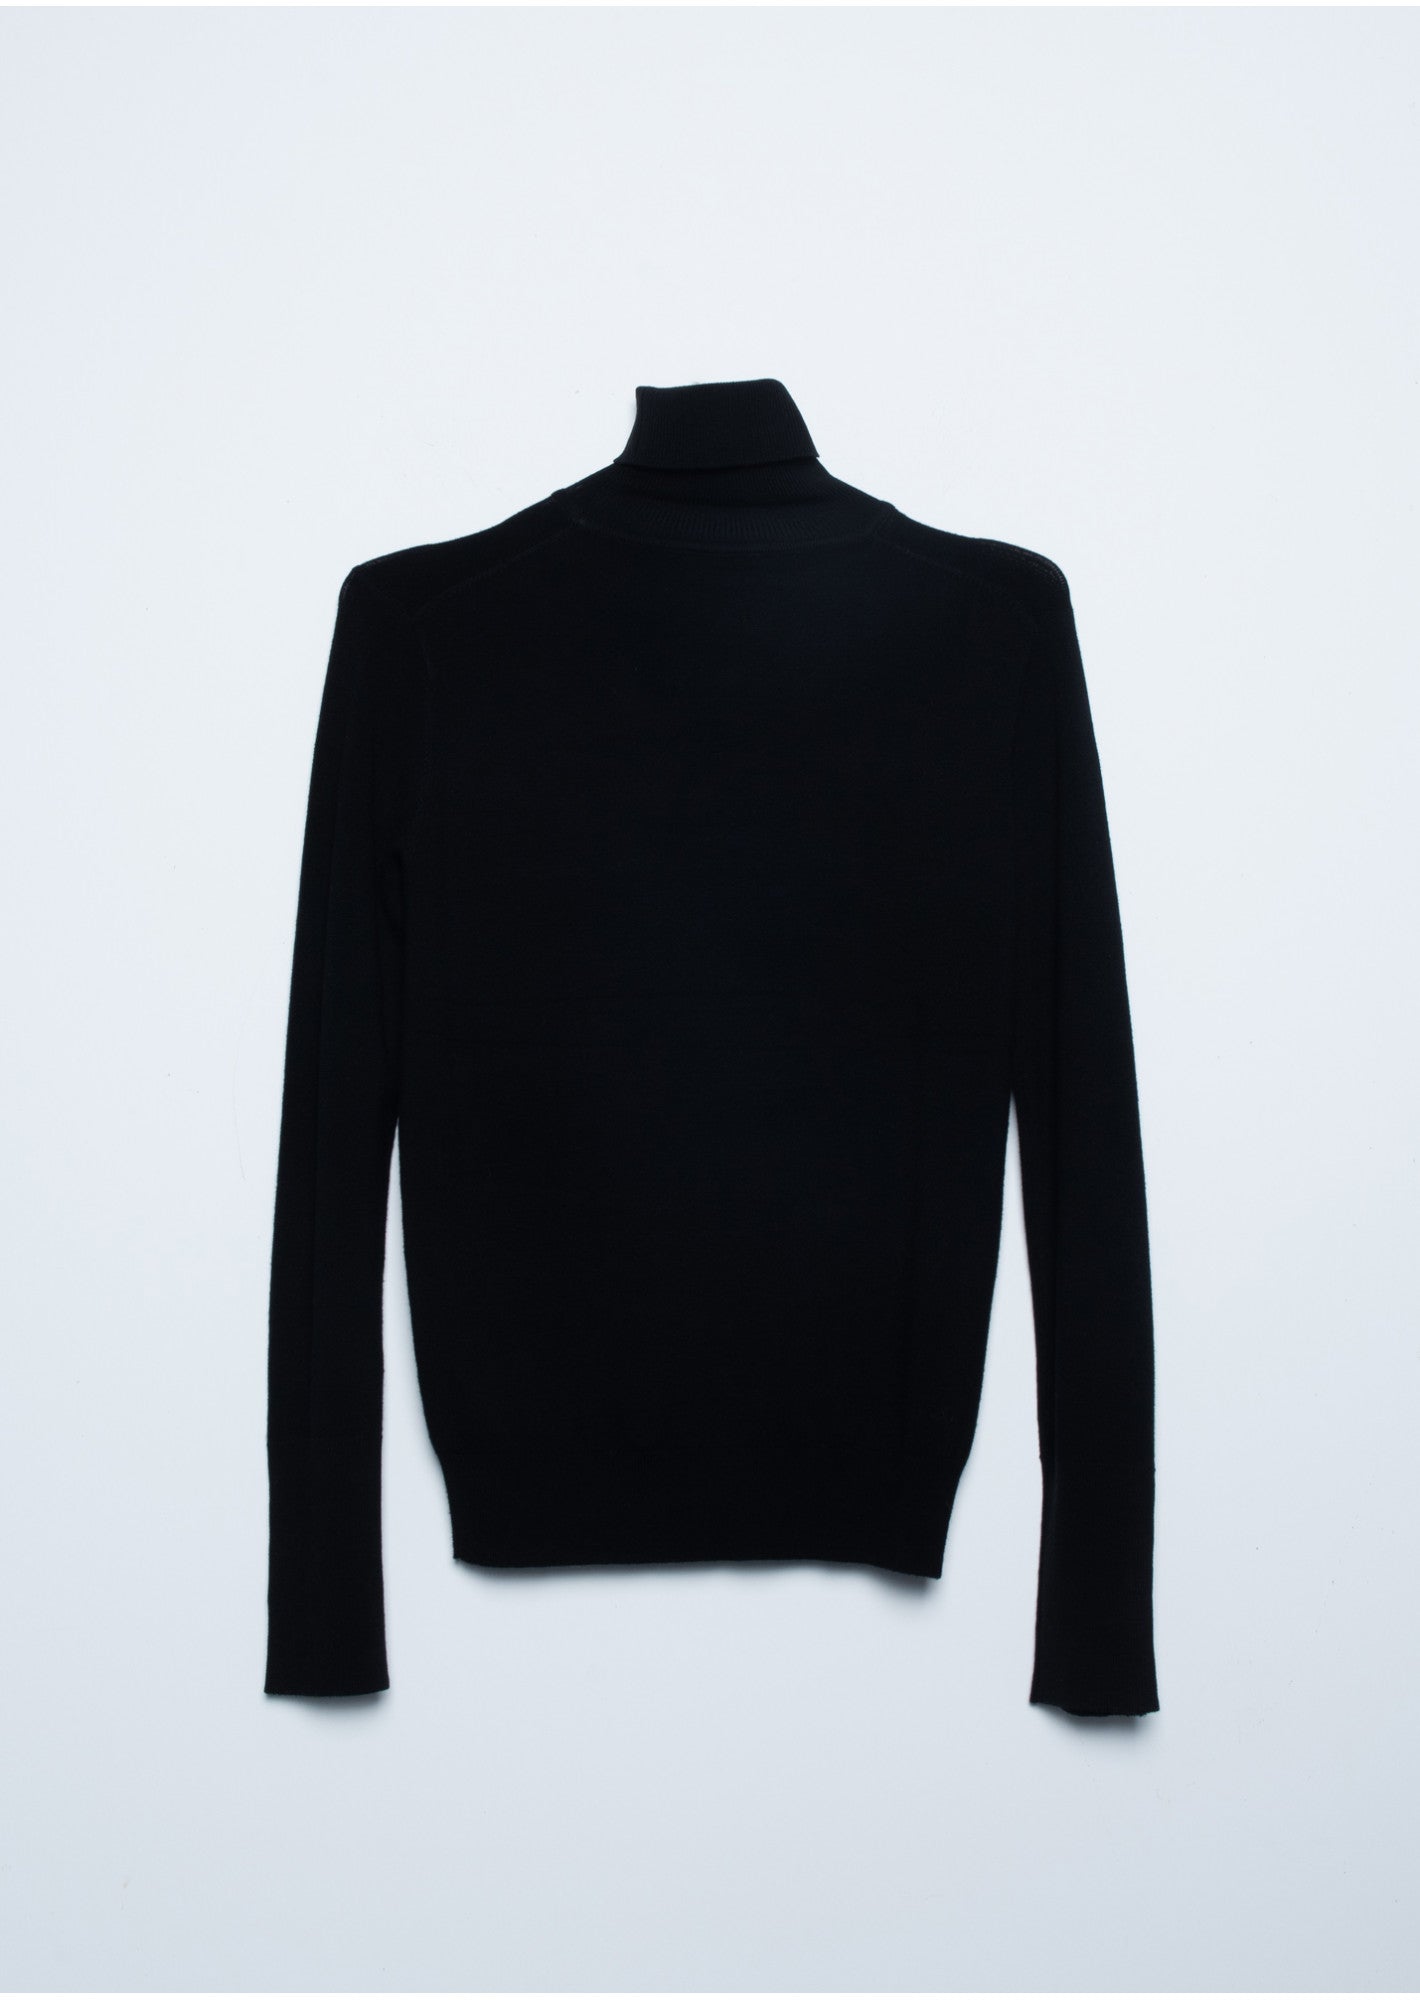 Blusa/Sweater Básico